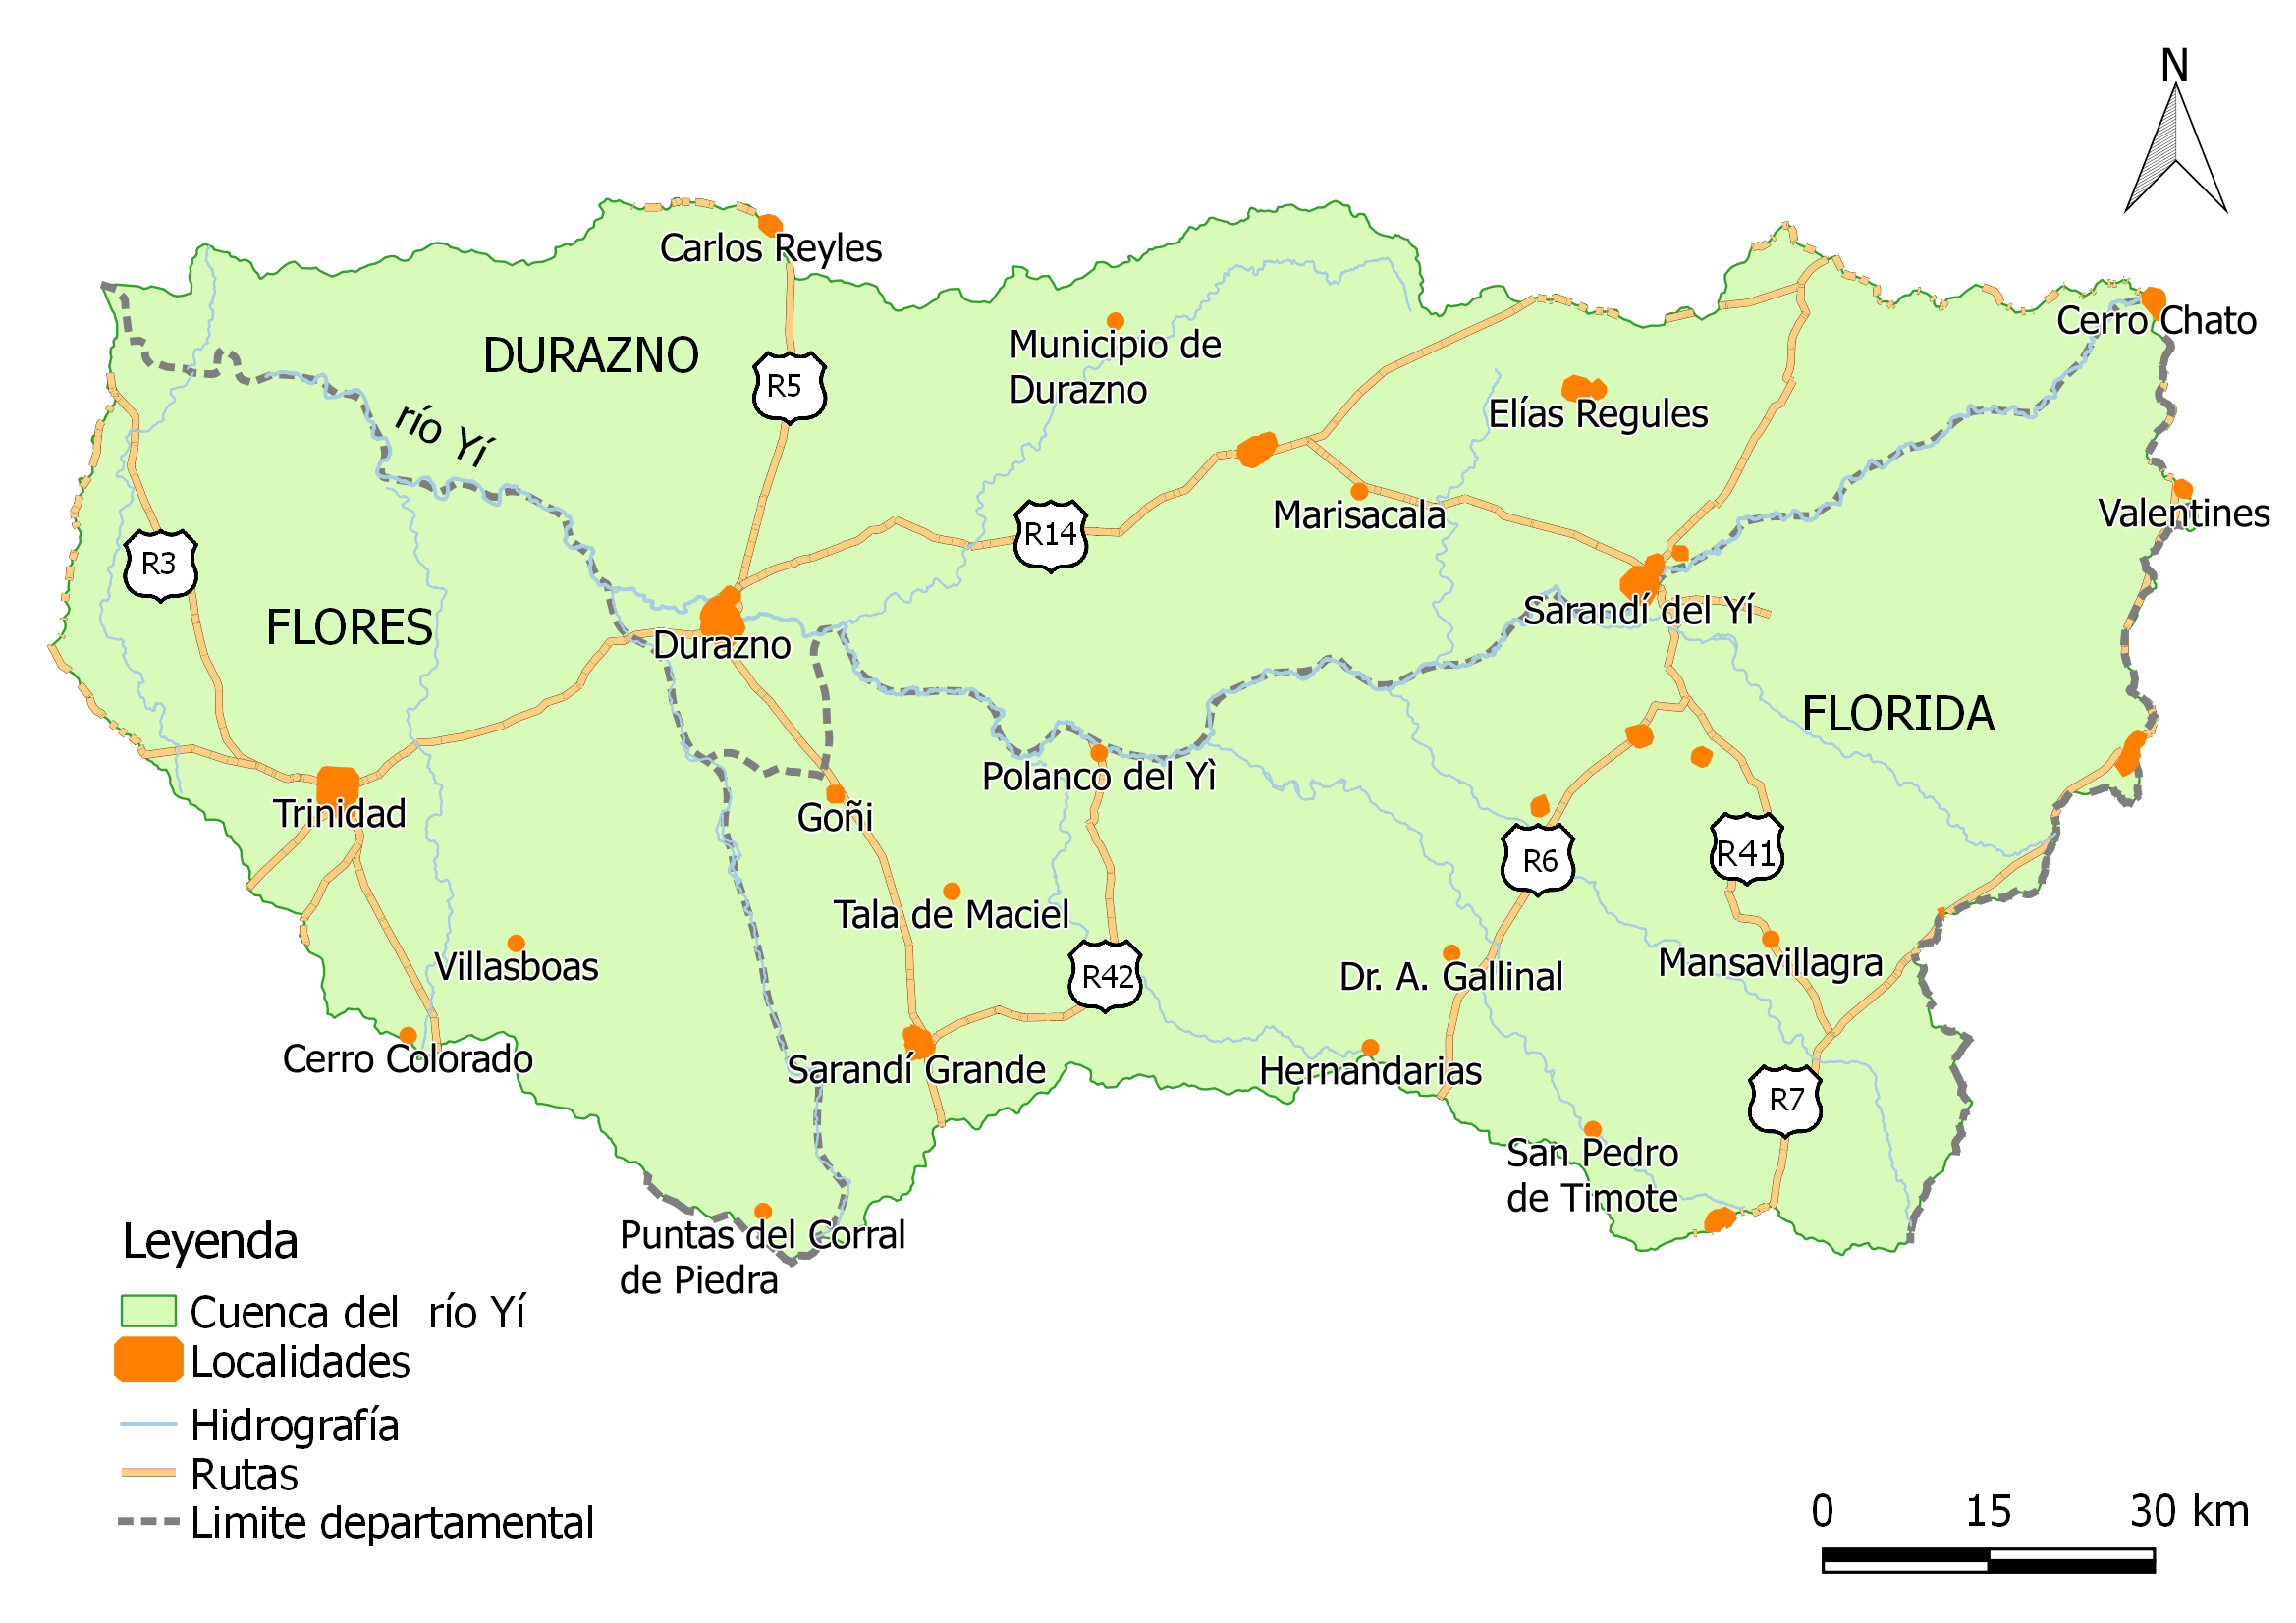 Cuenca YI Localidades